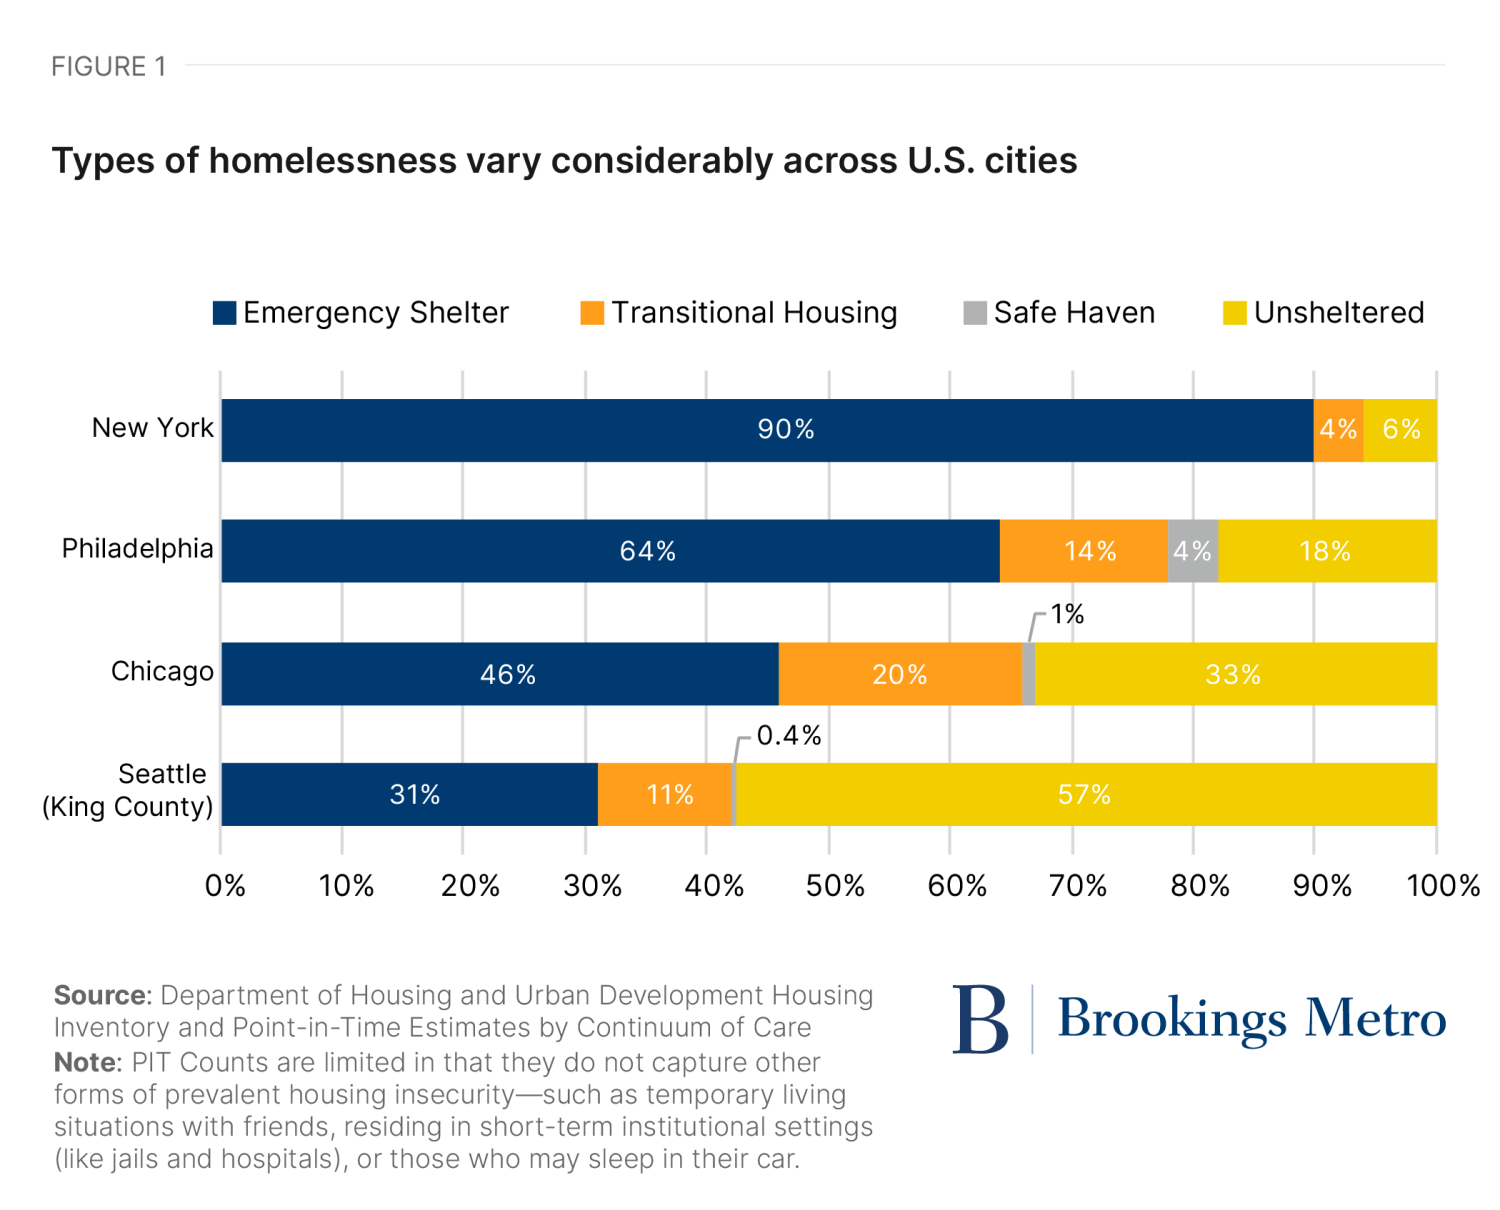 Figure 1. Types of homelessness vary considerably across U.S. cities